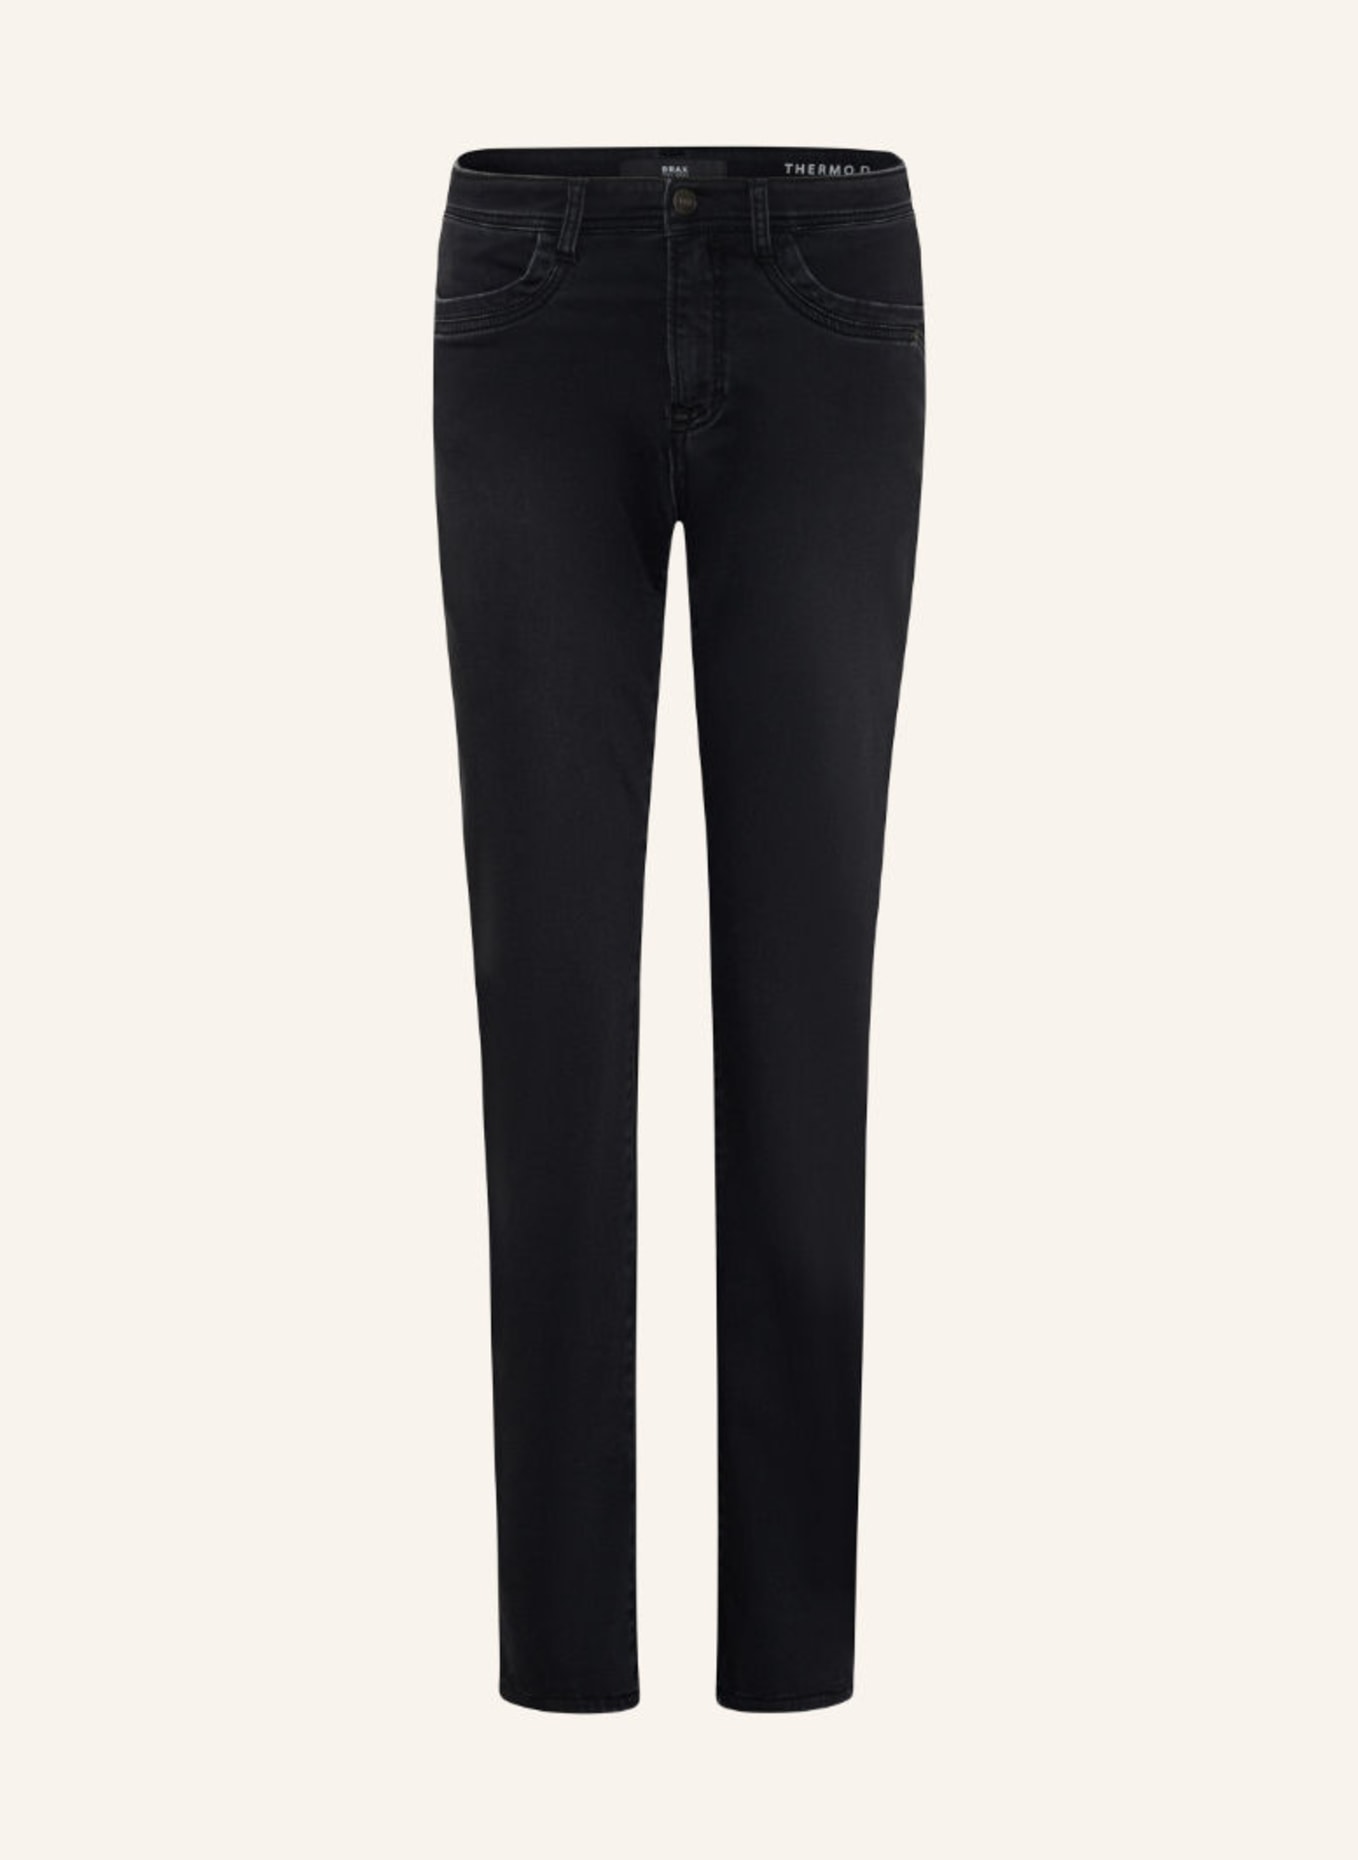 CAROLA in Five-Pocket-Jeans STYLE BRAX dunkelgrau